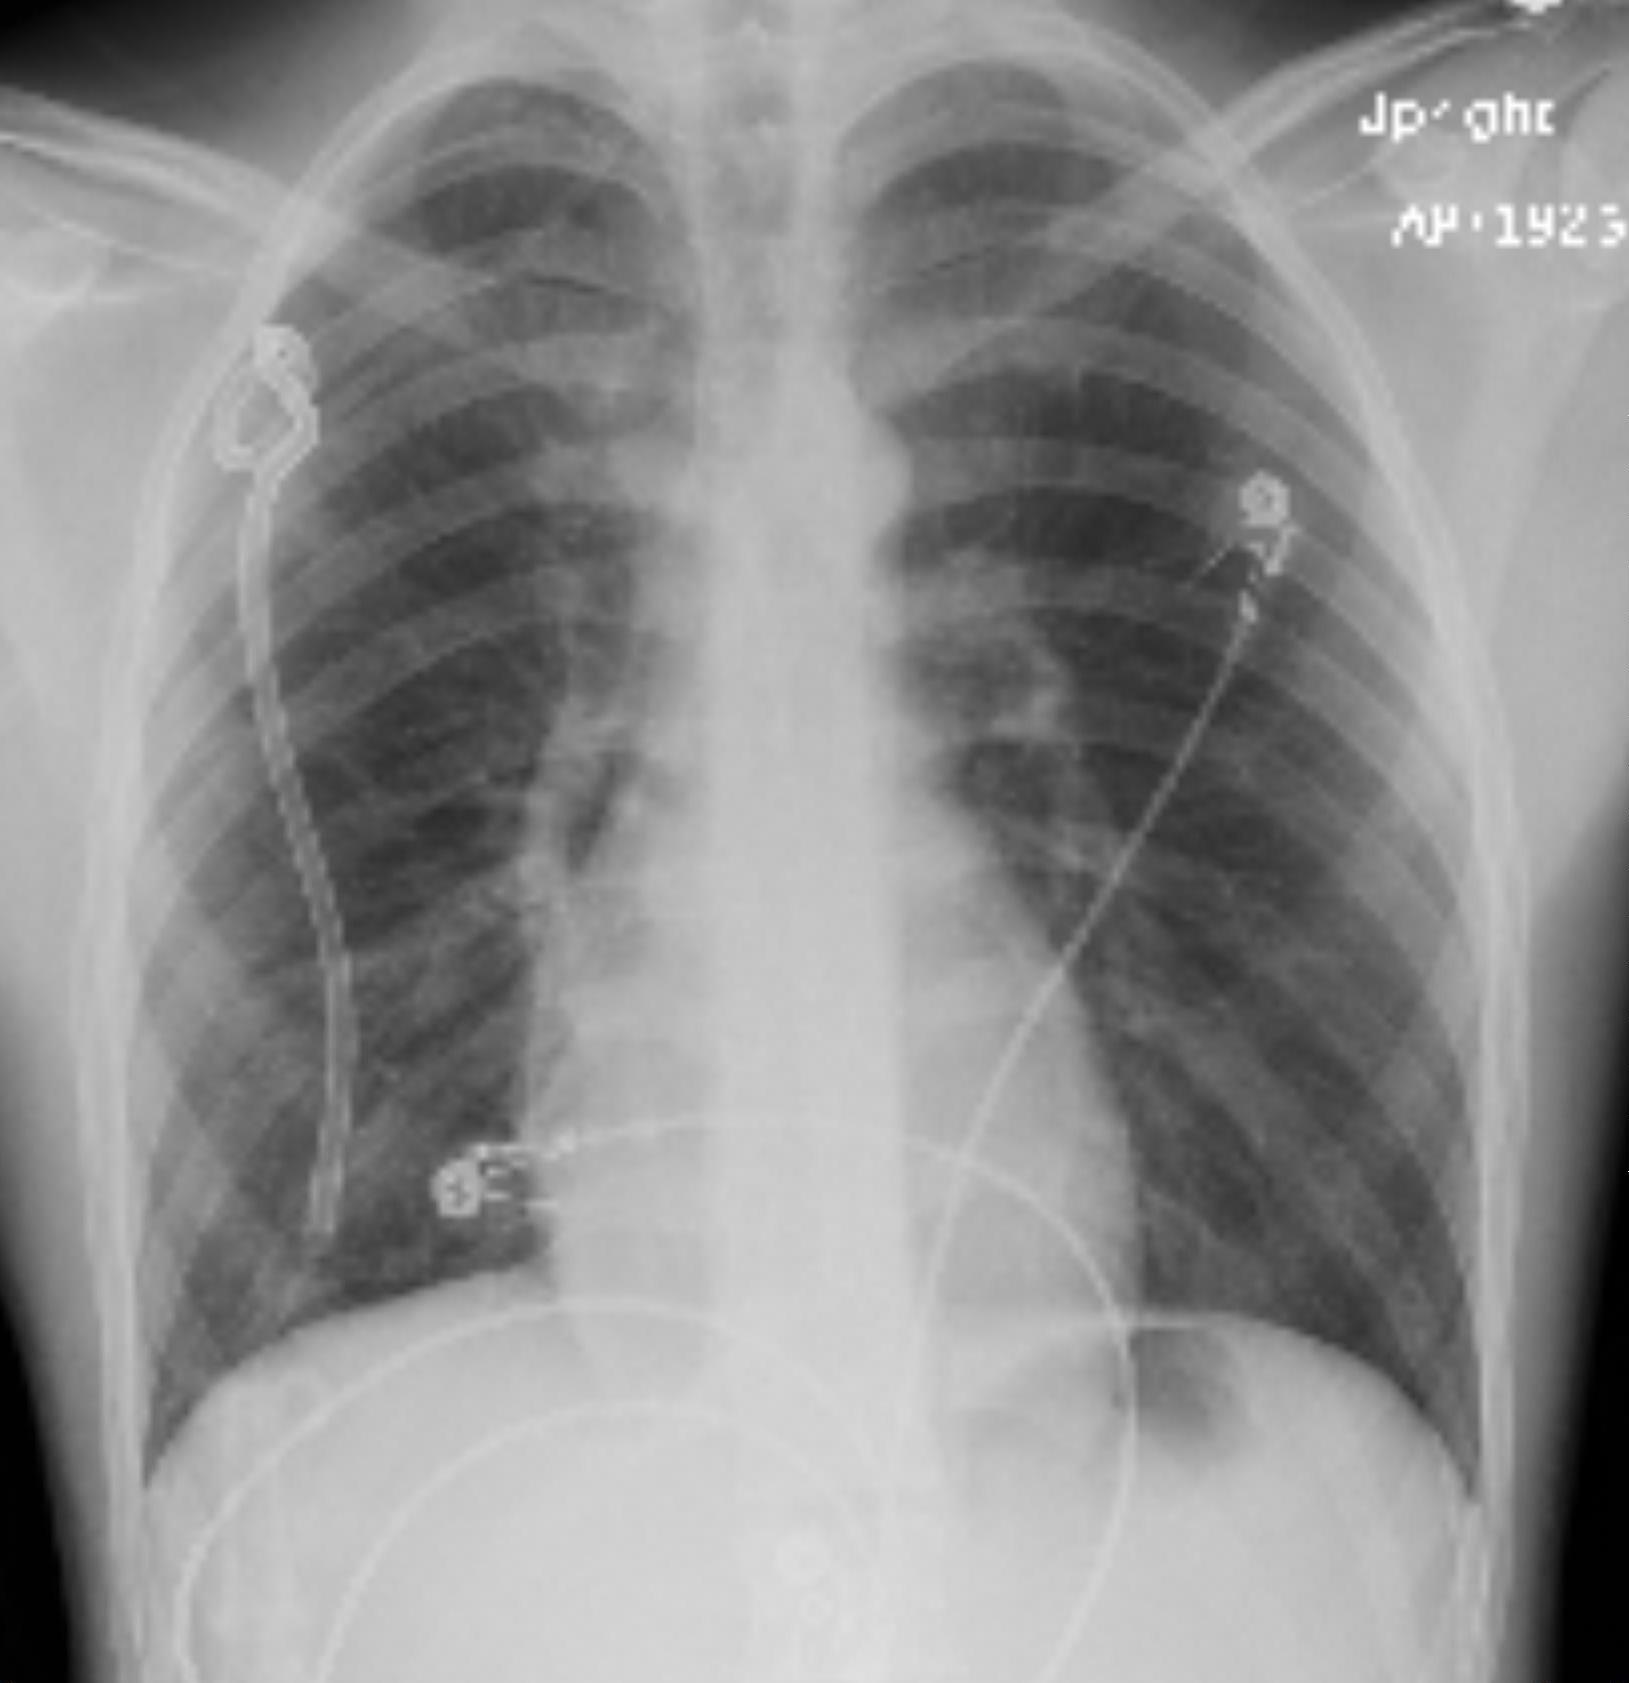 spontaneous pneumothorax chest tube